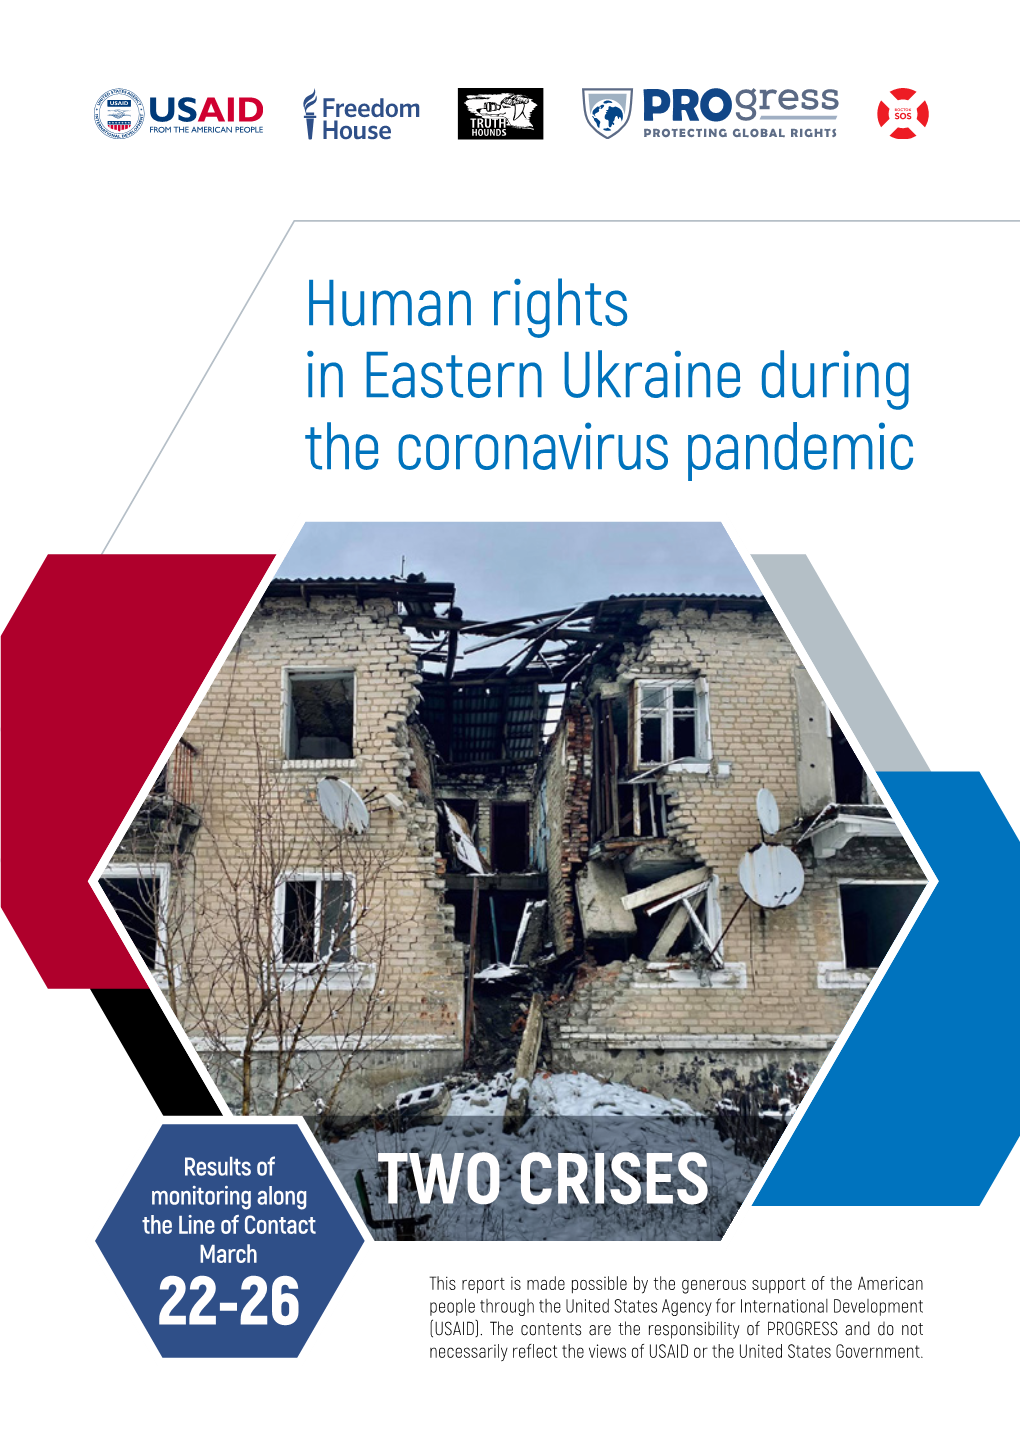 Human Rights in Eastern Ukraine During the Coronavirus Pandemic